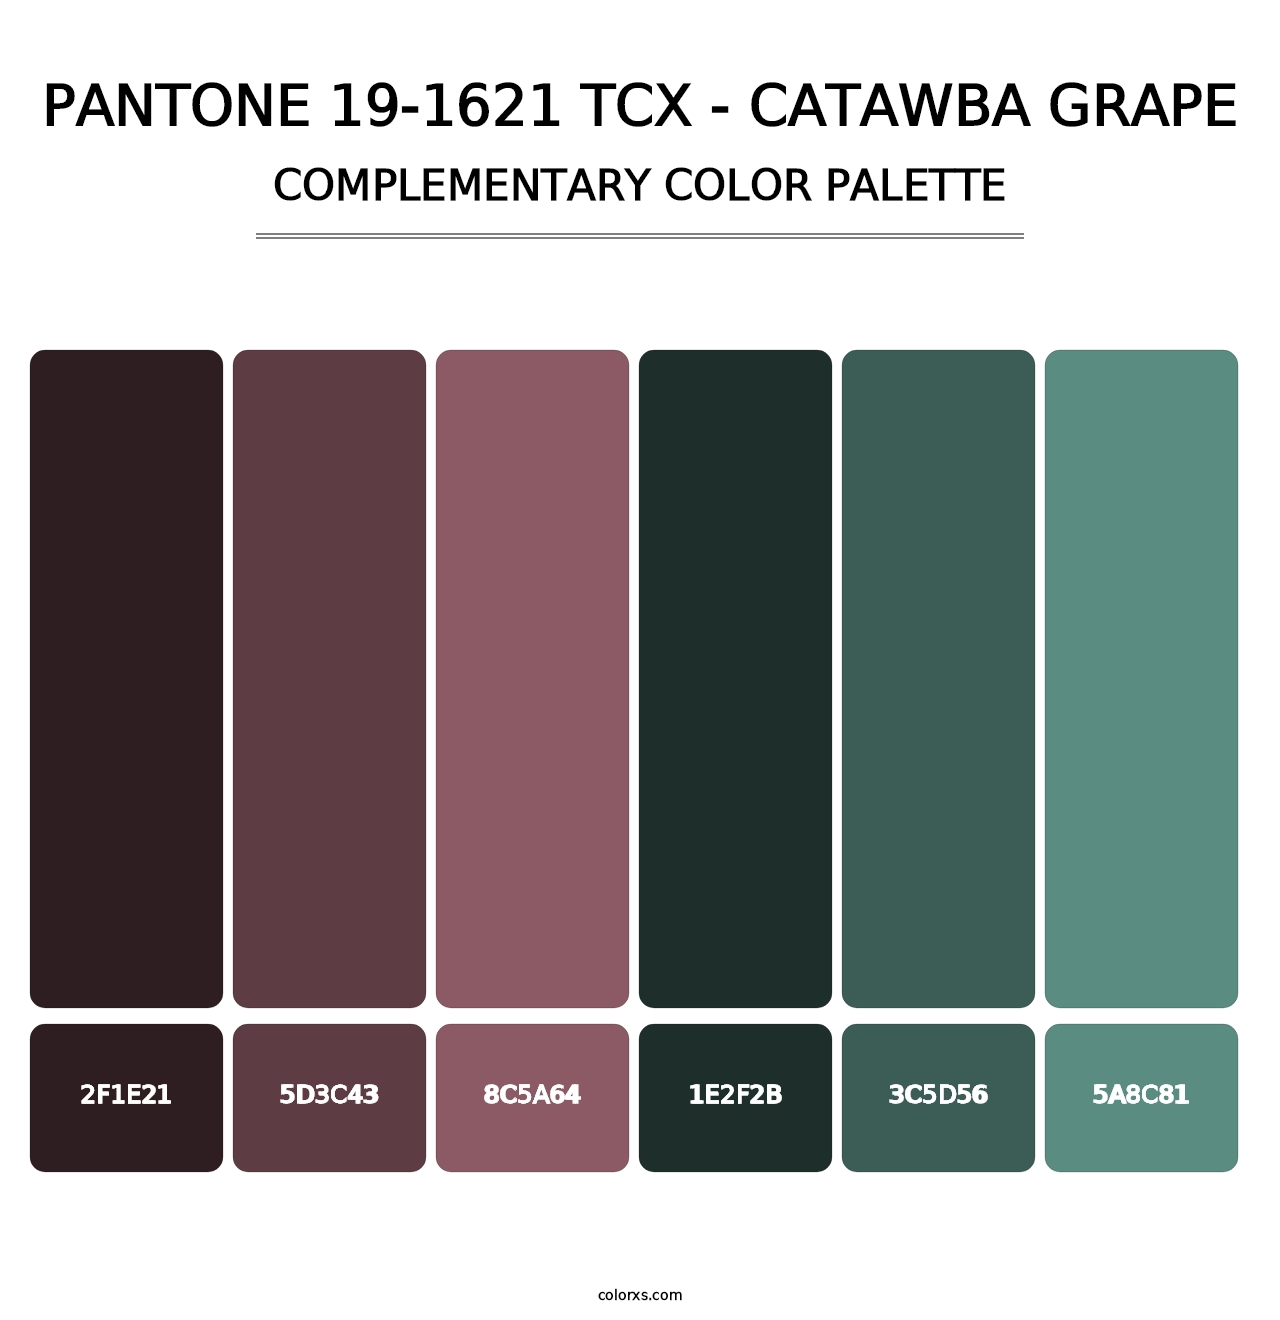 PANTONE 19-1621 TCX - Catawba Grape - Complementary Color Palette